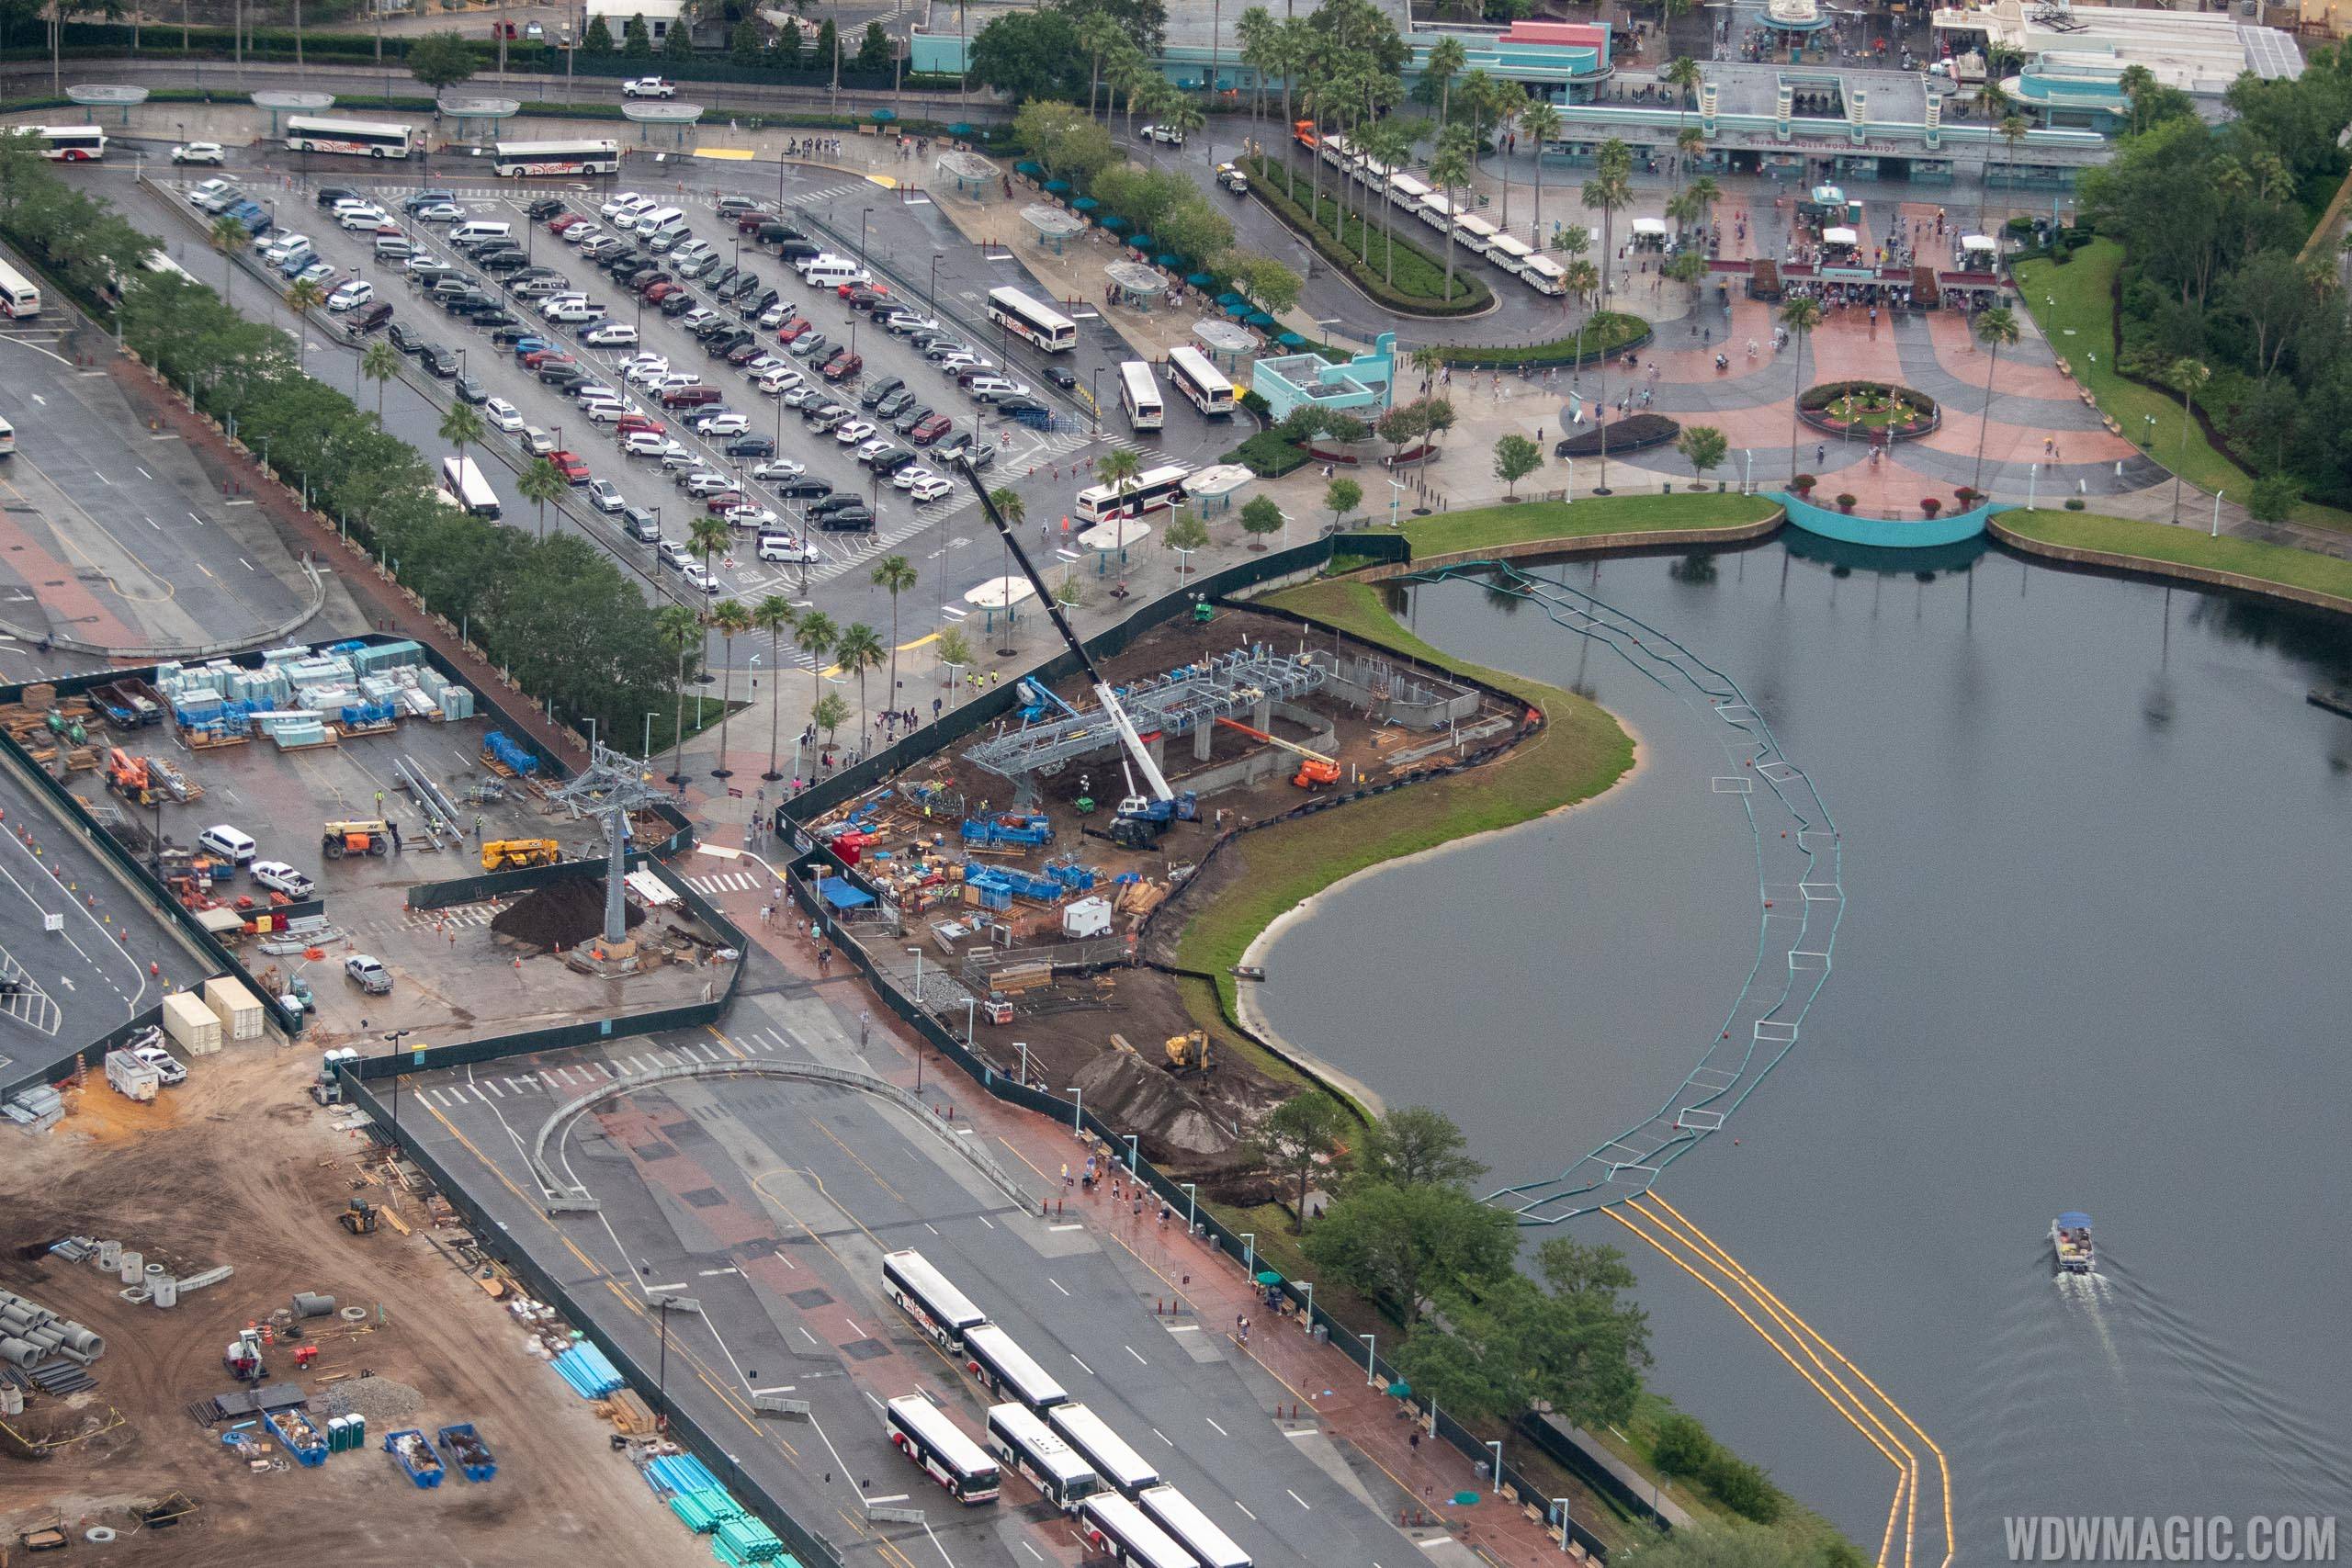 Disney Skyliner construction aerial views - May 2018